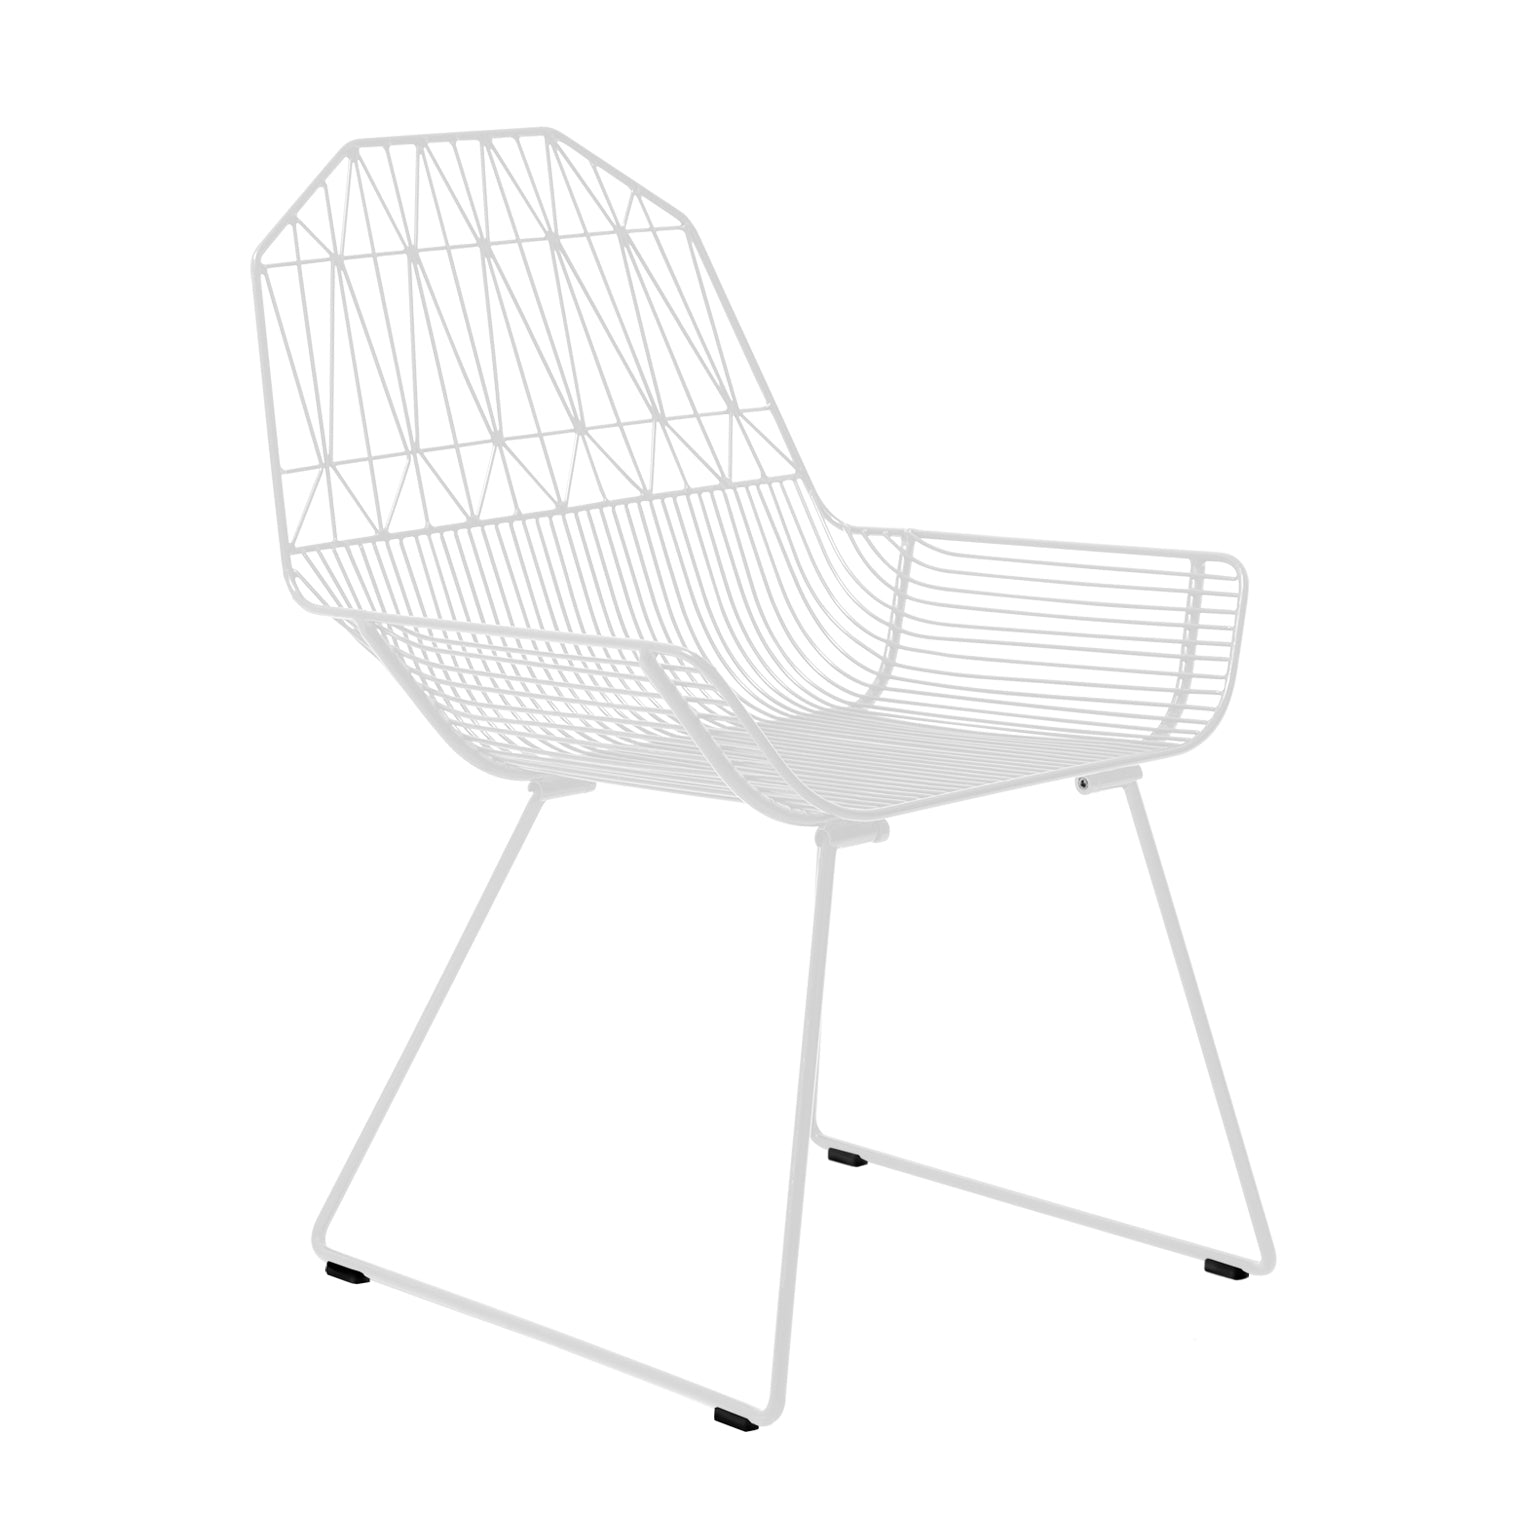 The Farmhouse Chair - Set of 2 - White / Aqua Seat Pad